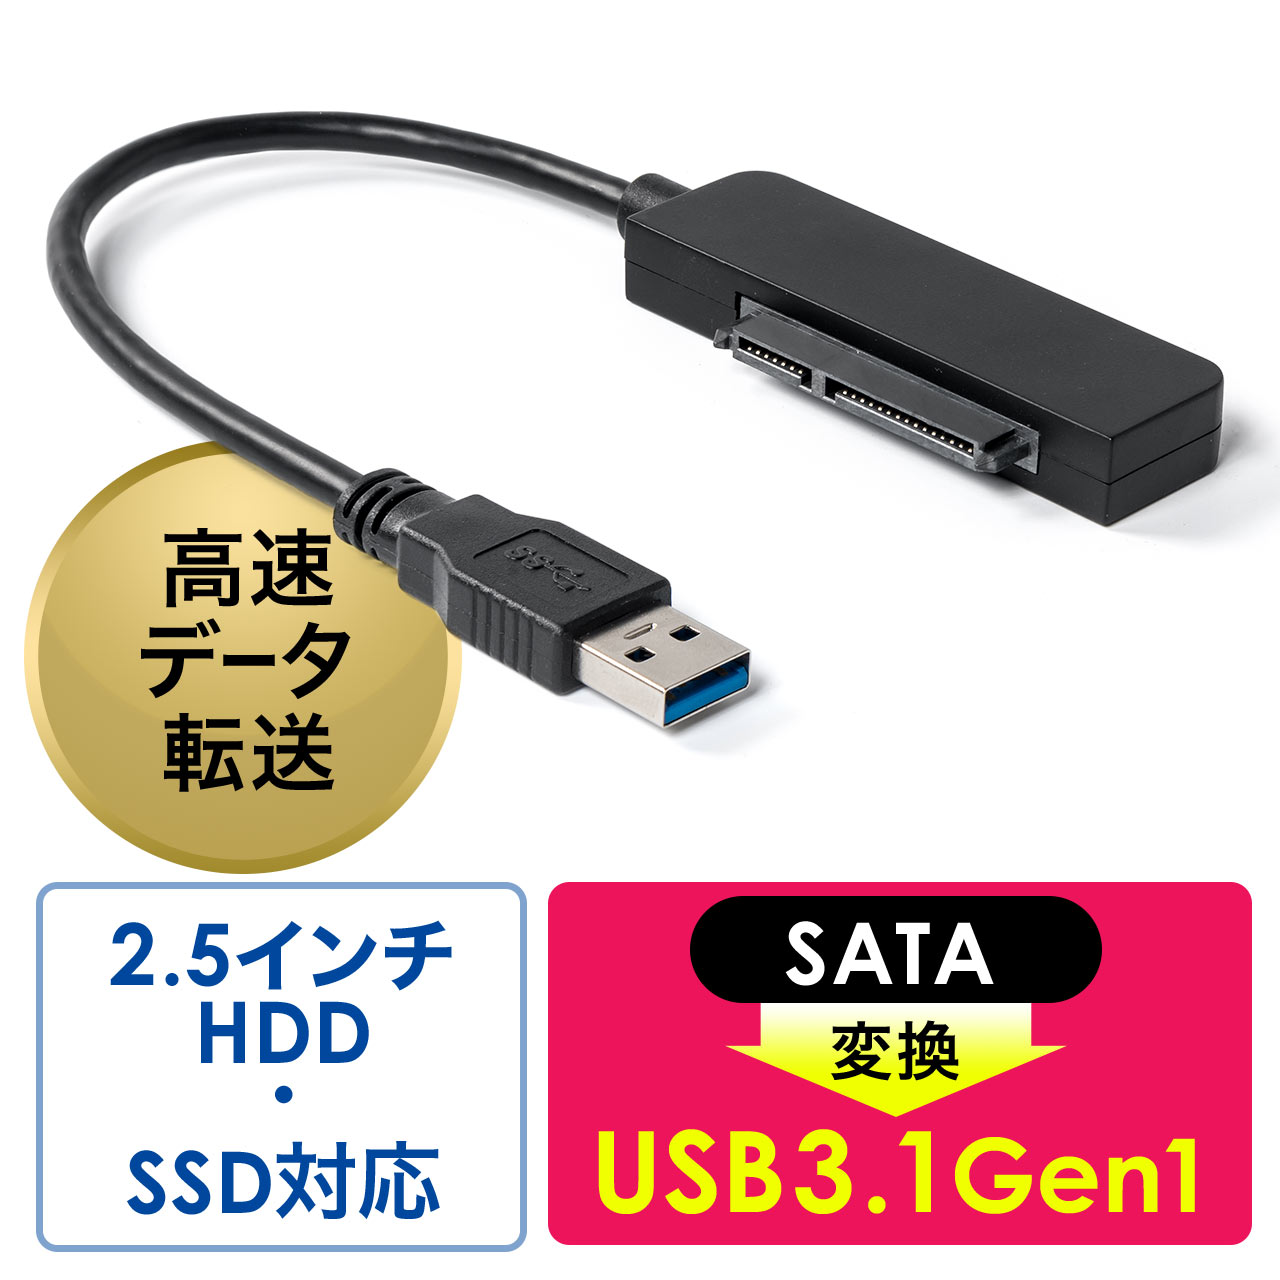 SATA-USB 3.0 変換ケーブル 2.5インチ SSD HDD用